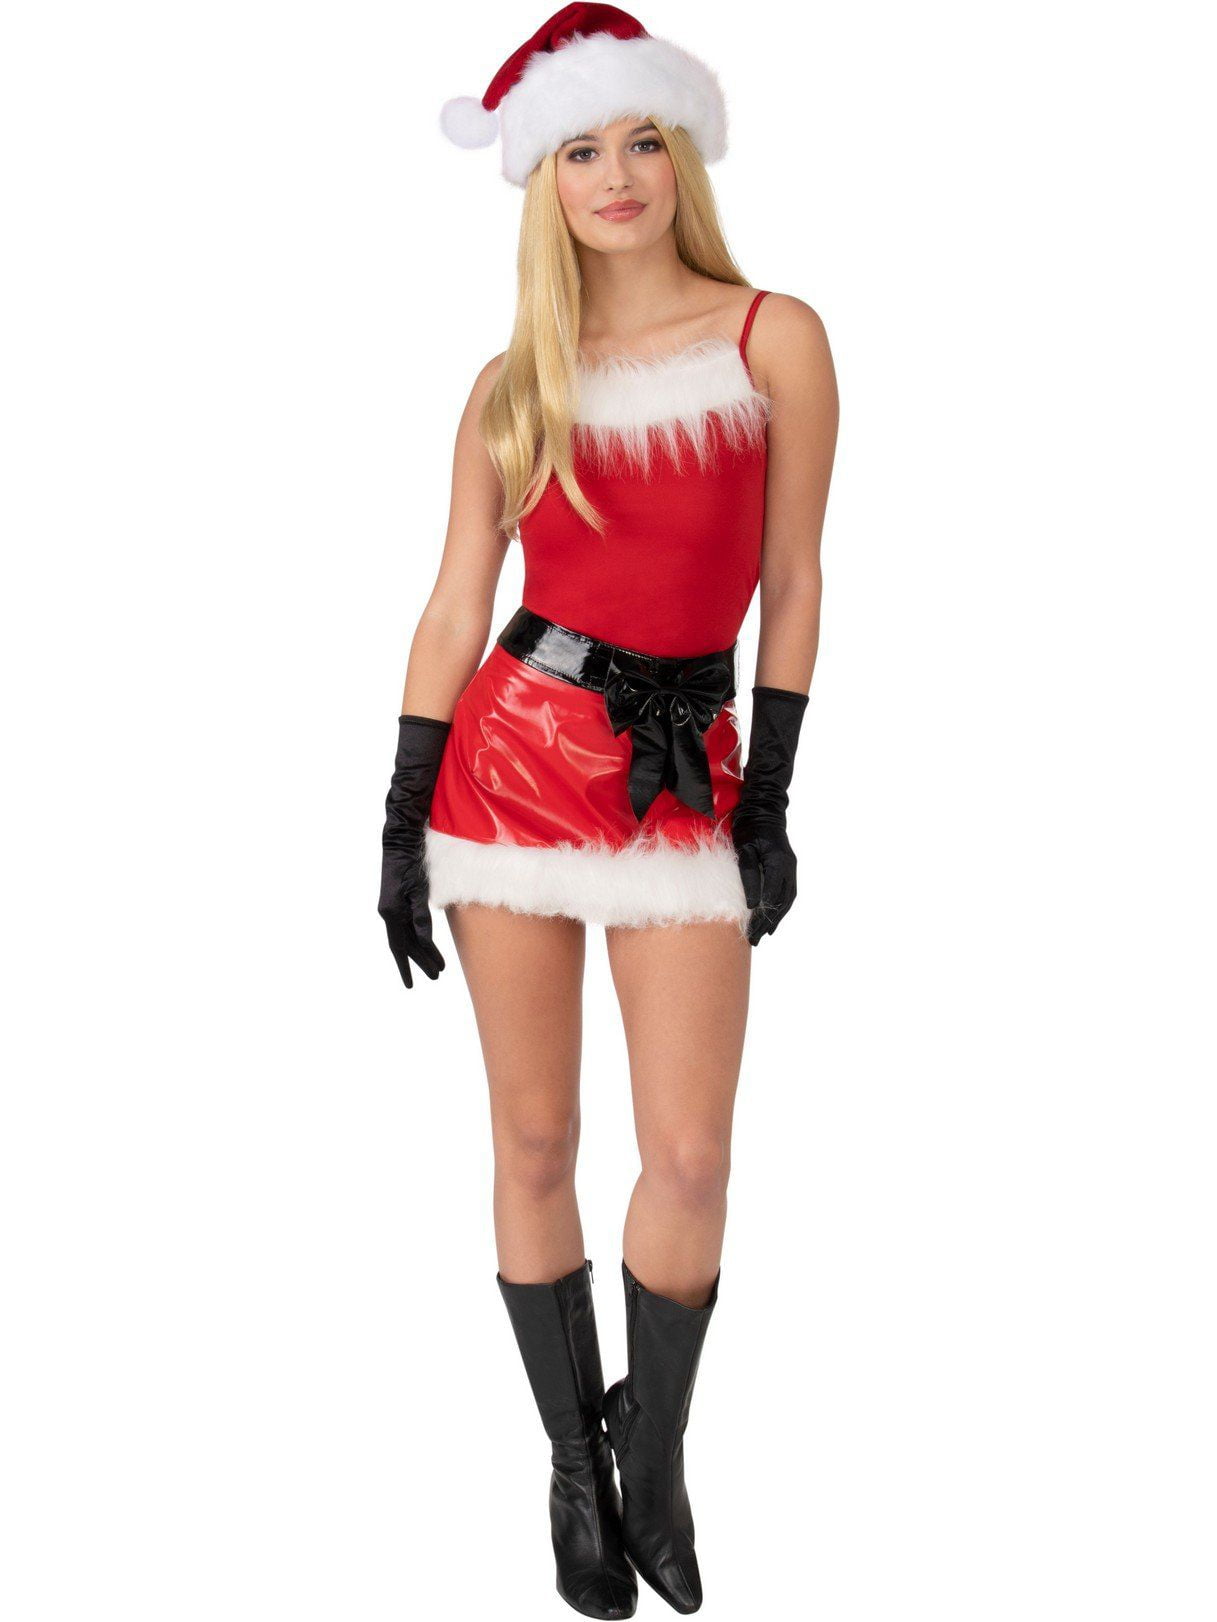 Mean Girls Christmas Outfit - Walmart.com